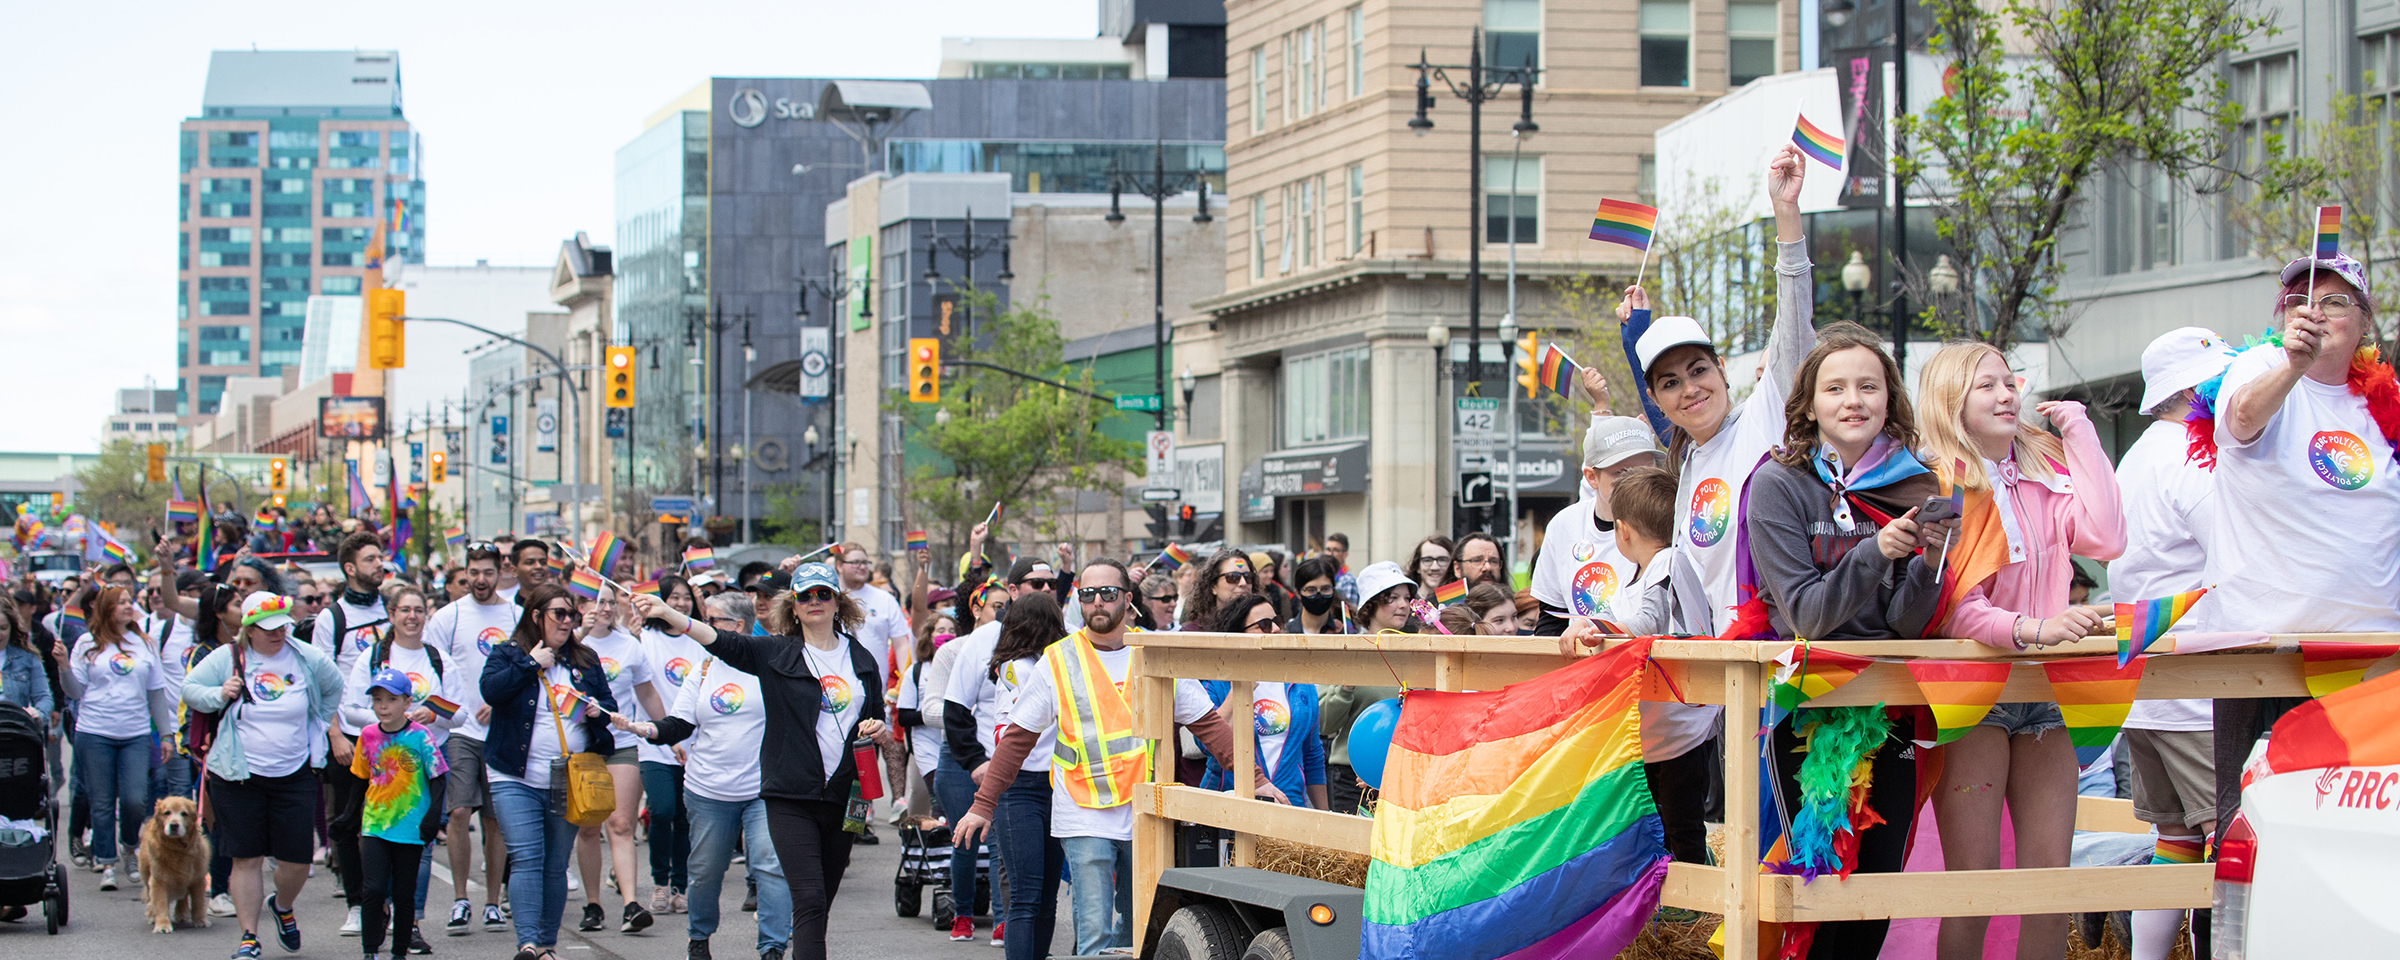 Folx walking in the Pride Winnipeg Parade down Portage Avenue